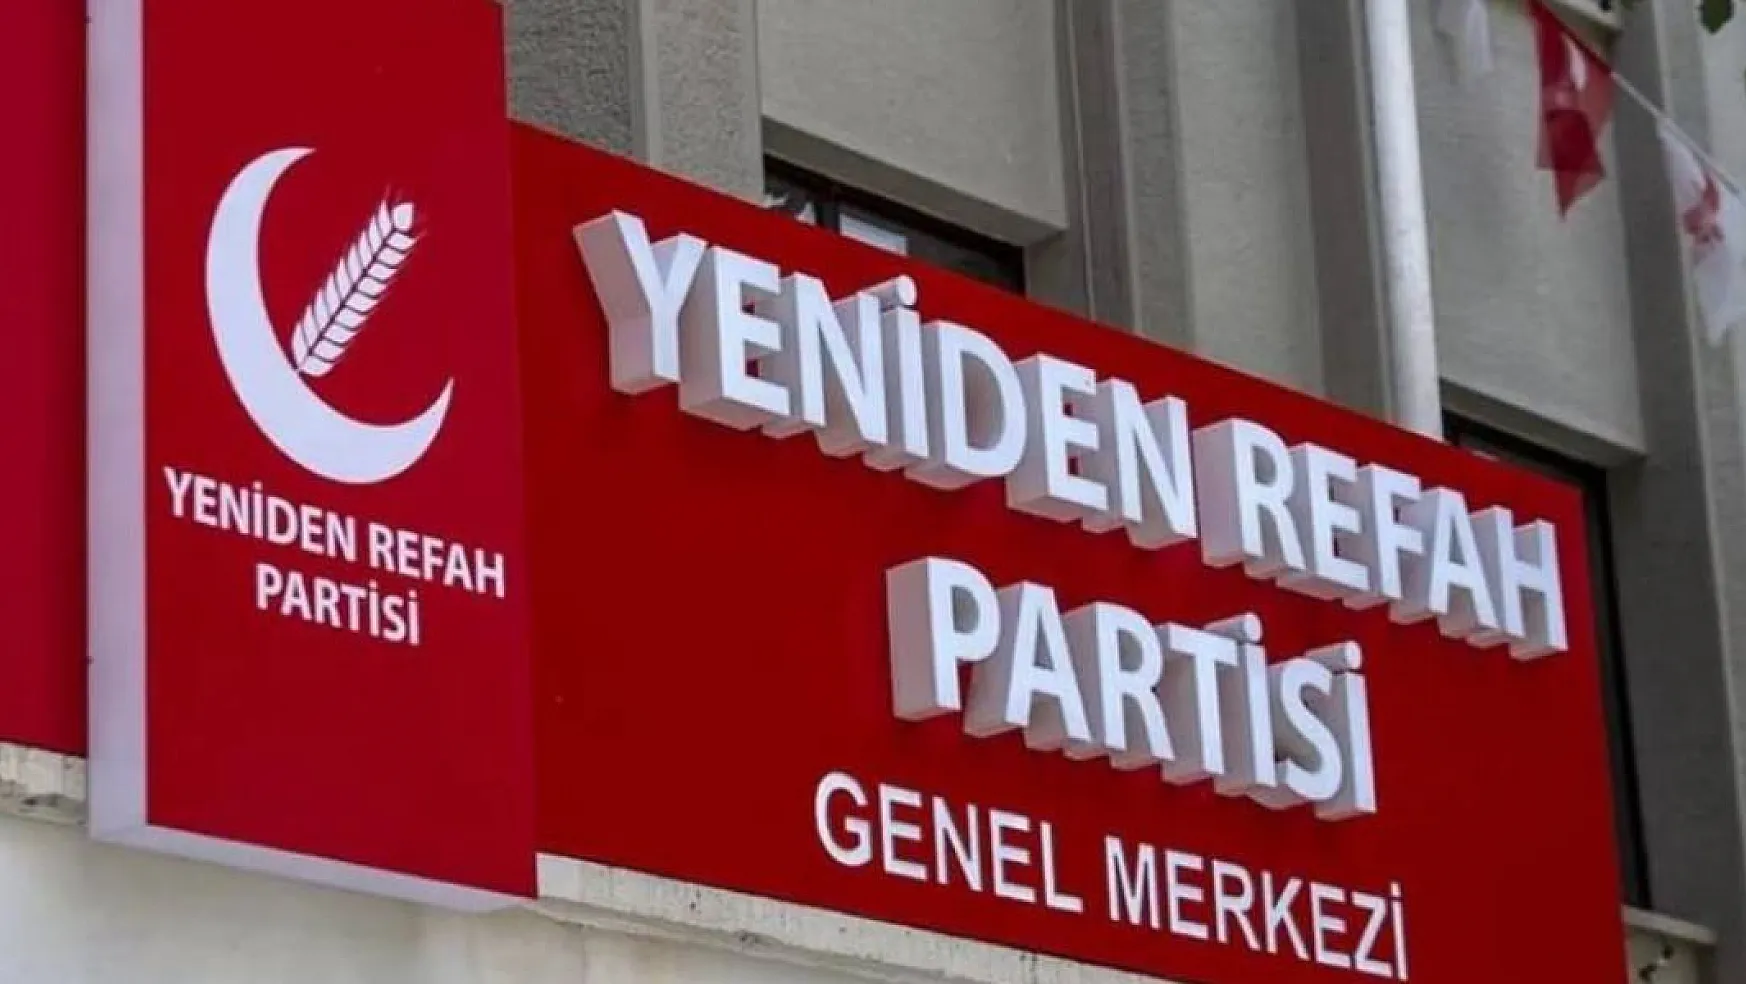 YRP İstanbul Adayı Altınöz'ün Cem Küçük'ün Programına Çıkması Engellendi